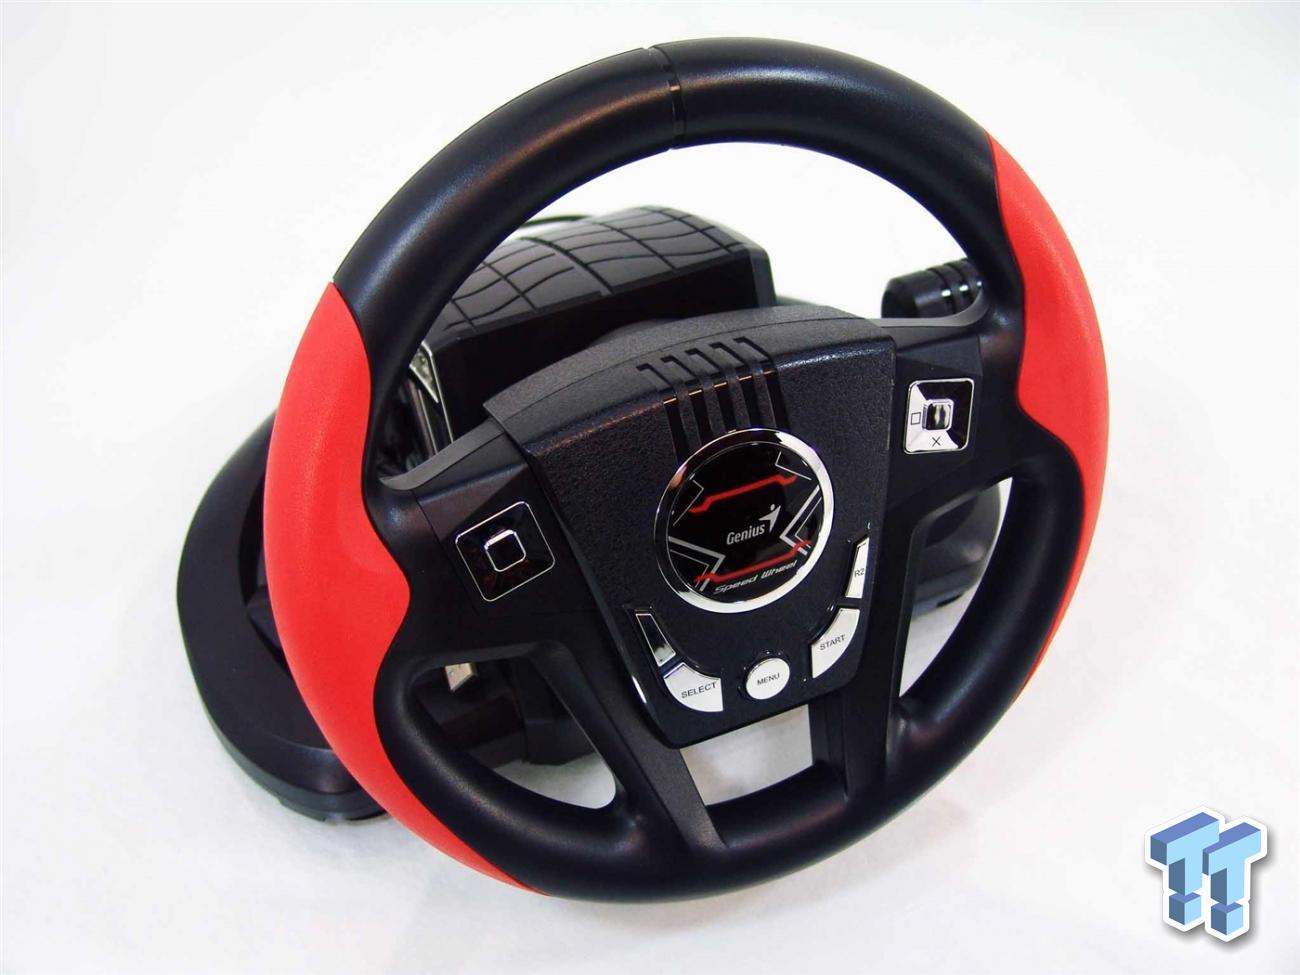 North America Deduct Goods Genius Speed Wheel 6 MT Vibration Feedback Racing Wheel Review